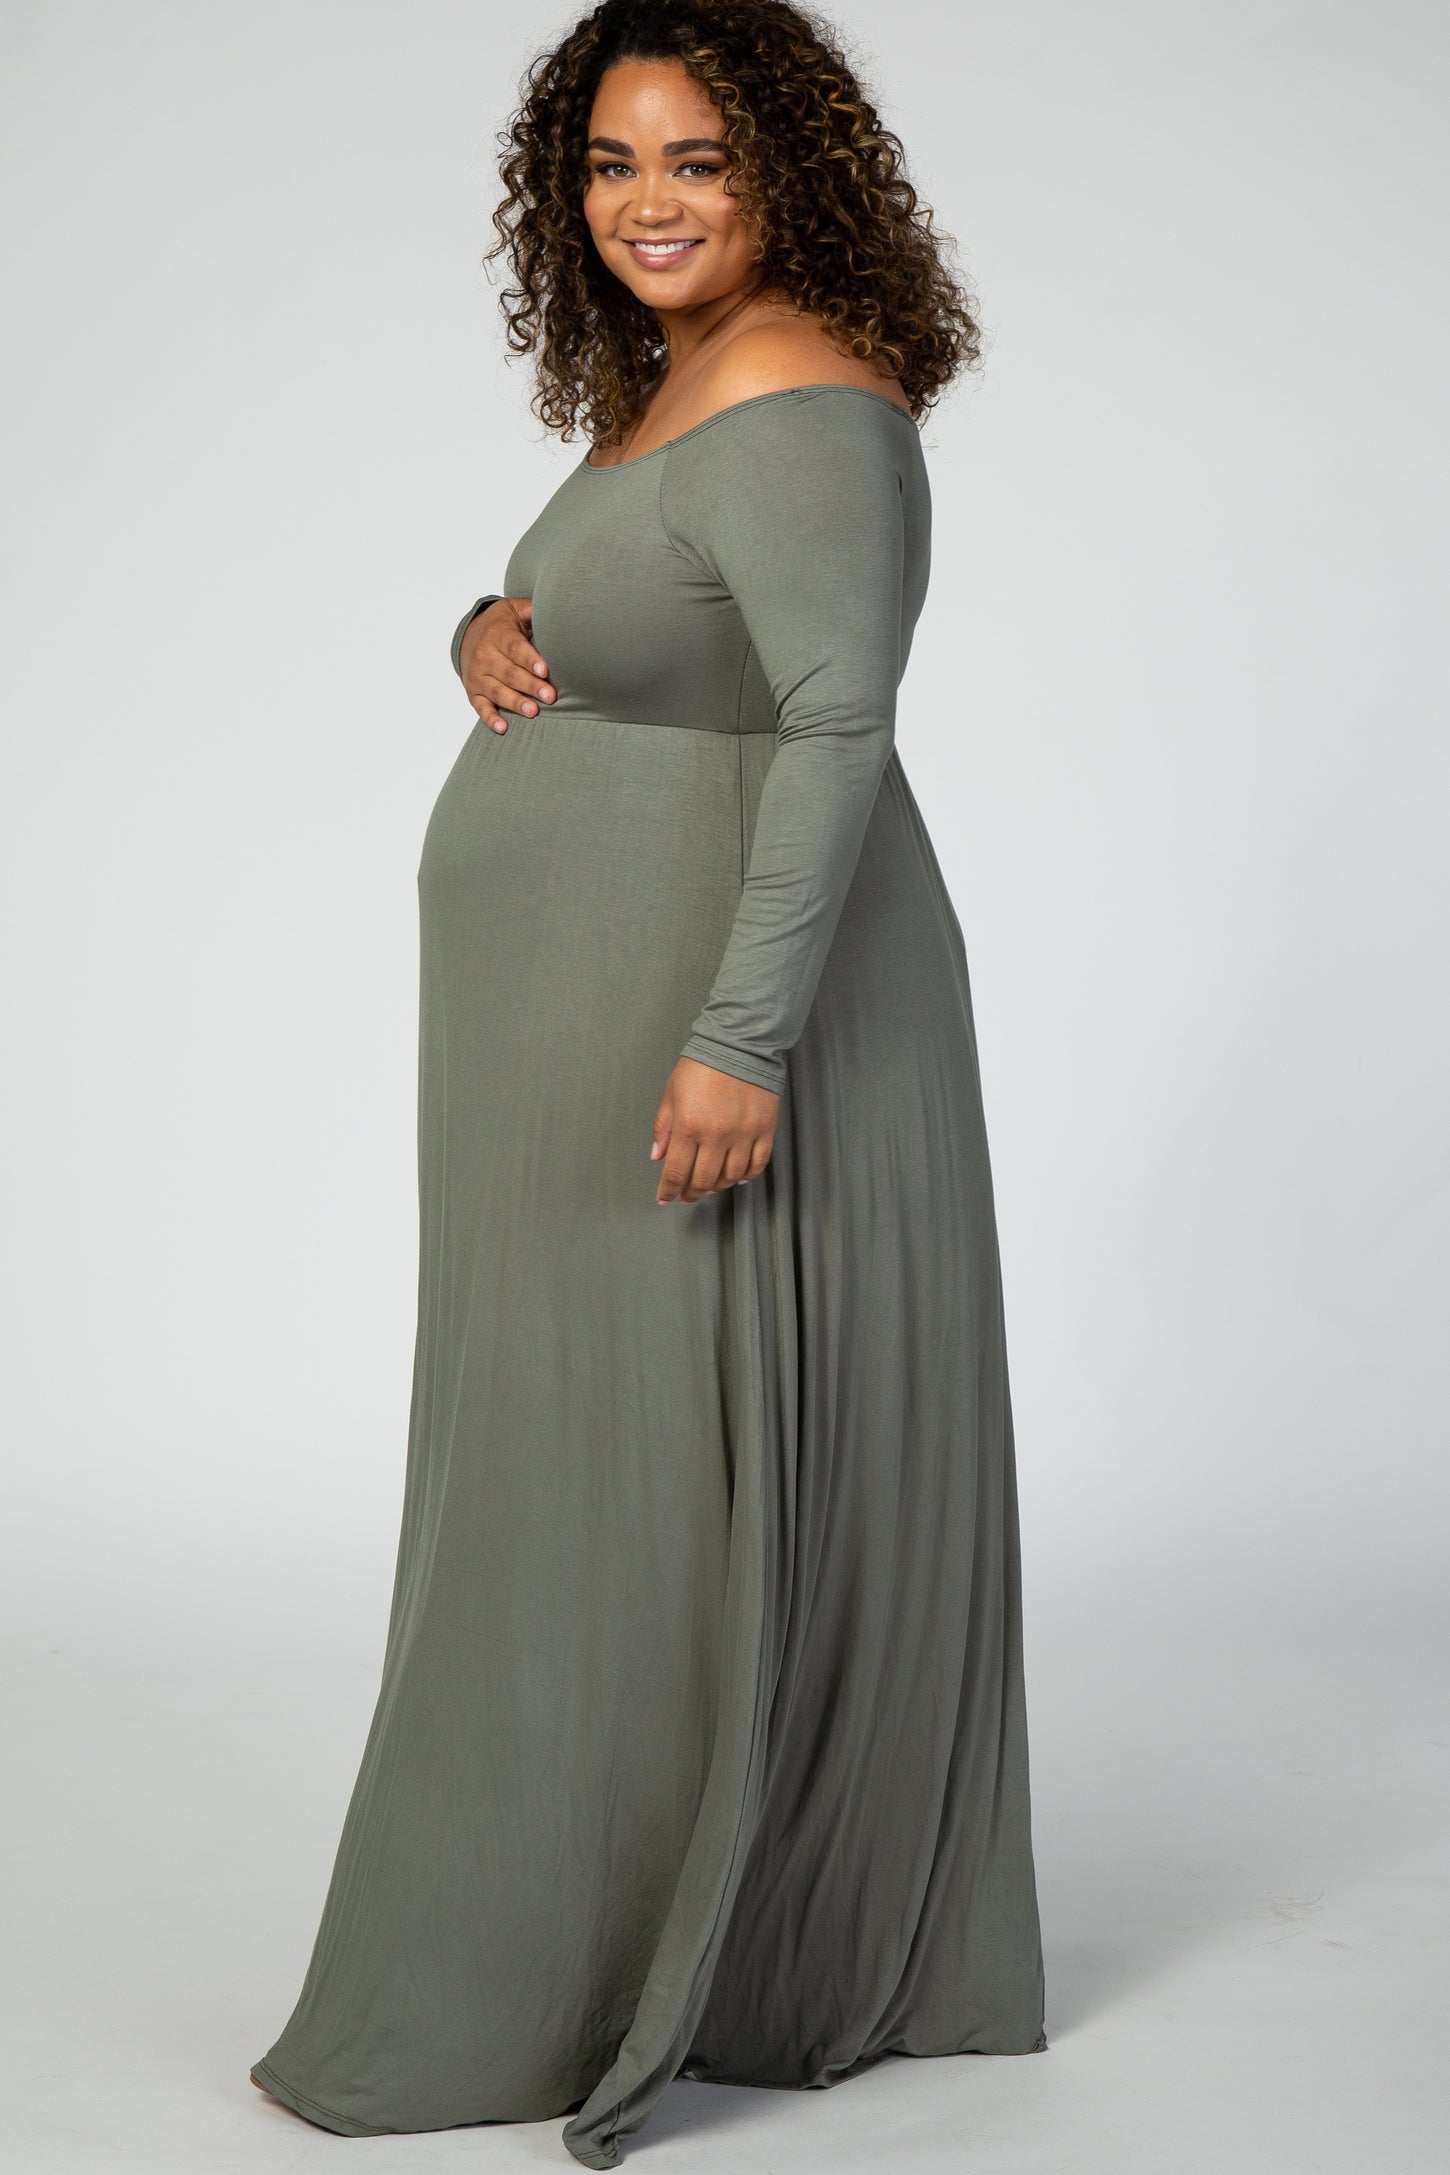 Olive Solid Off Shoulder Plus Maternity Maxi Dress